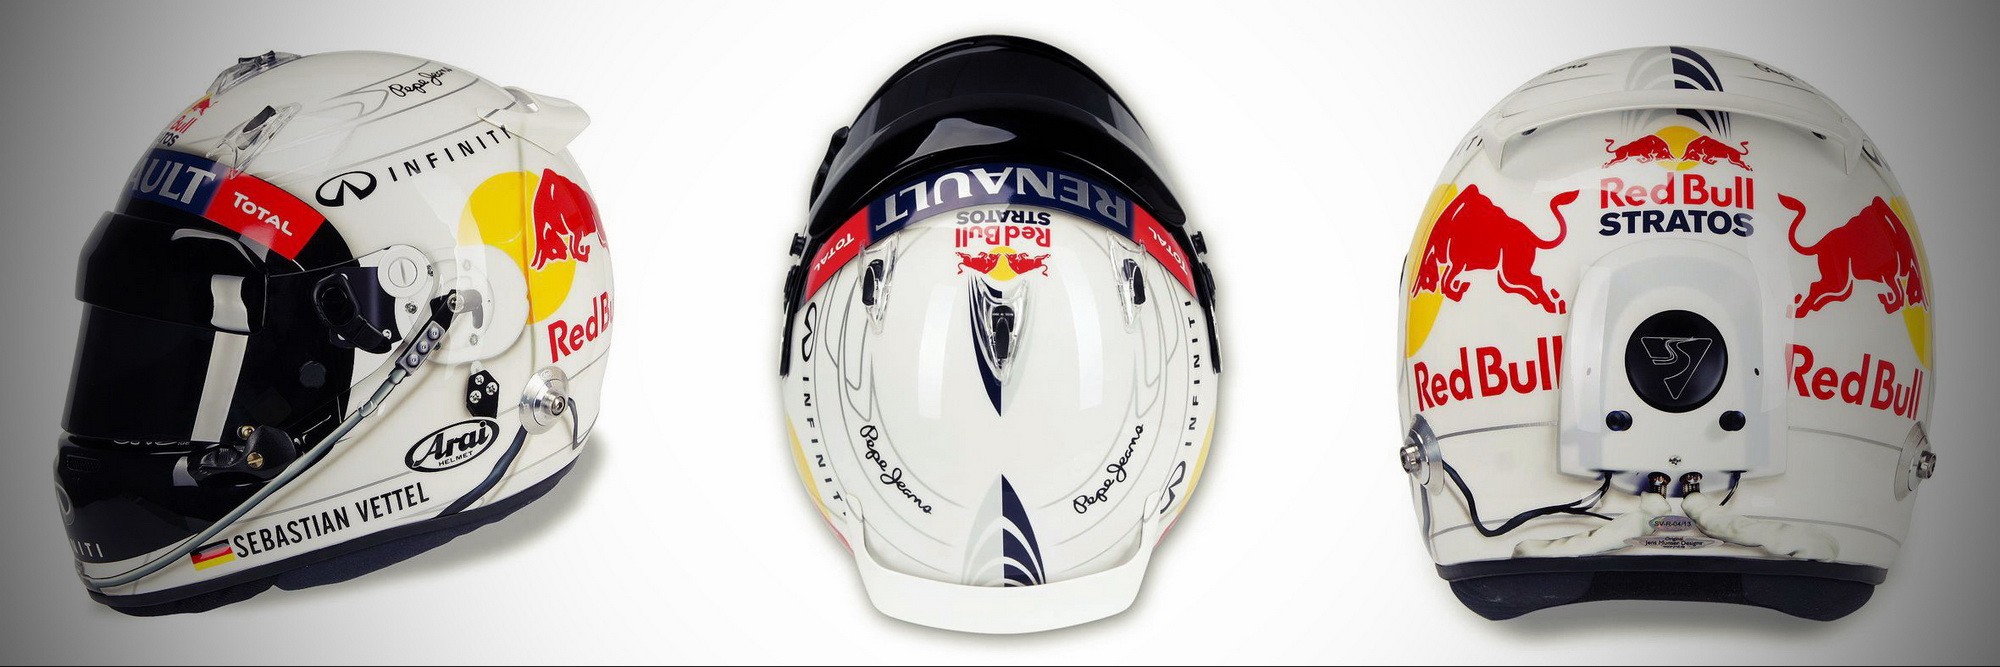 Шлем Себастьяна Феттеля на Гран-При Австралии 2013 | 2013 Australian Grand Prix helmet of Sebastian Vettel